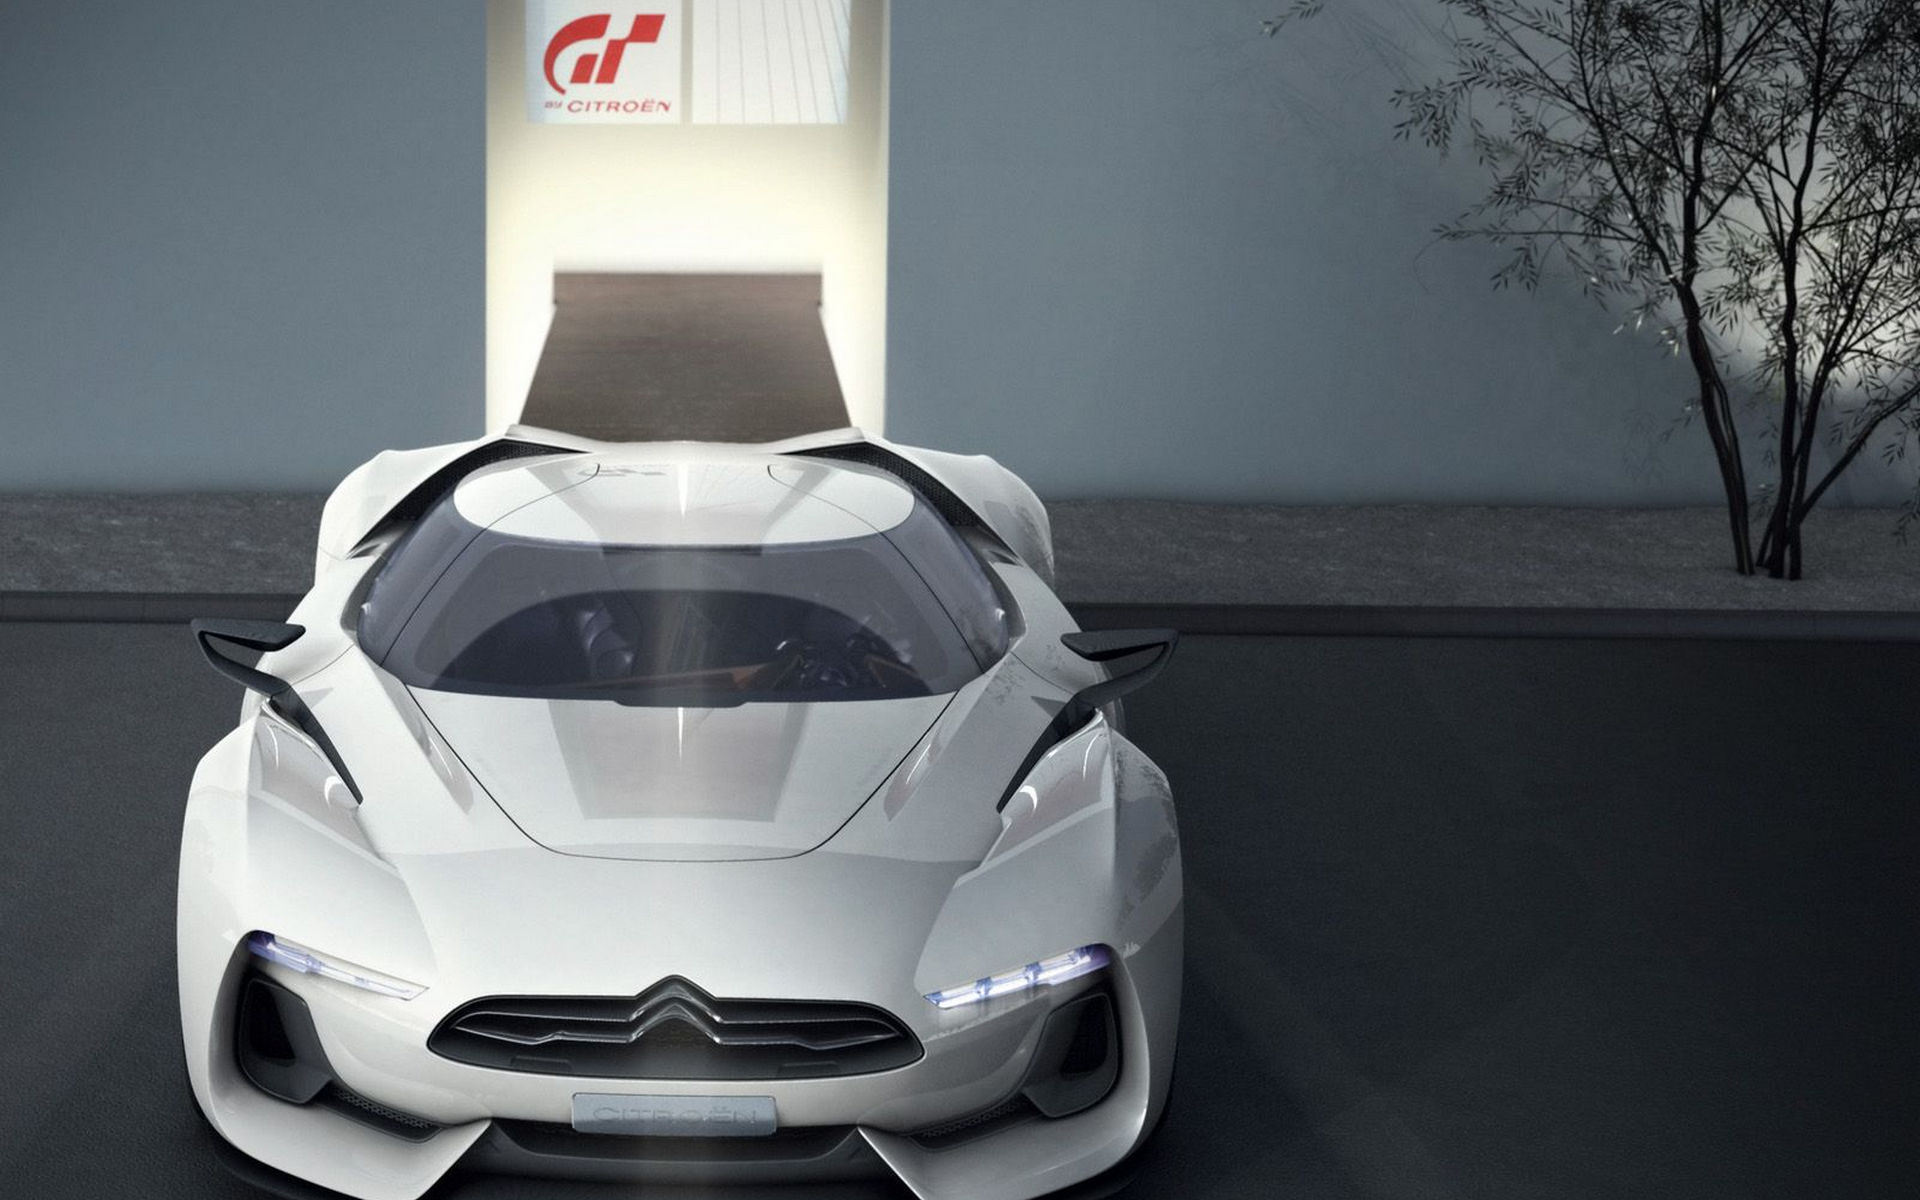 Wallpapers Citroen sports car concept on the desktop